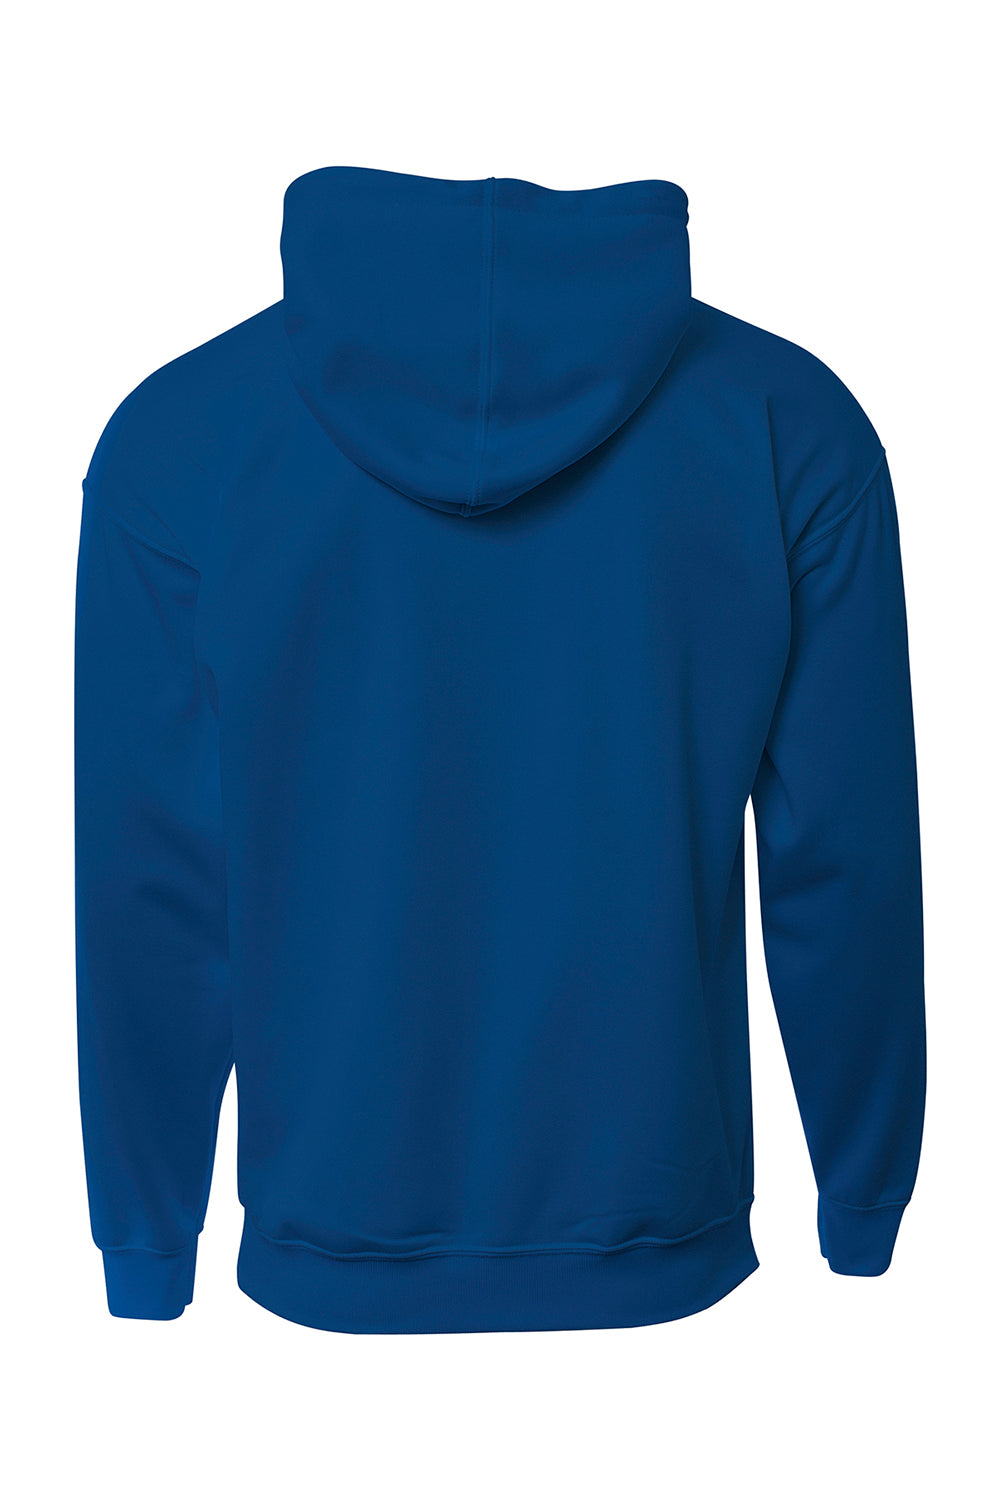 A4 N4279 Mens Sprint Tech Fleece Hooded Sweatshirt Navy Blue Flat Back